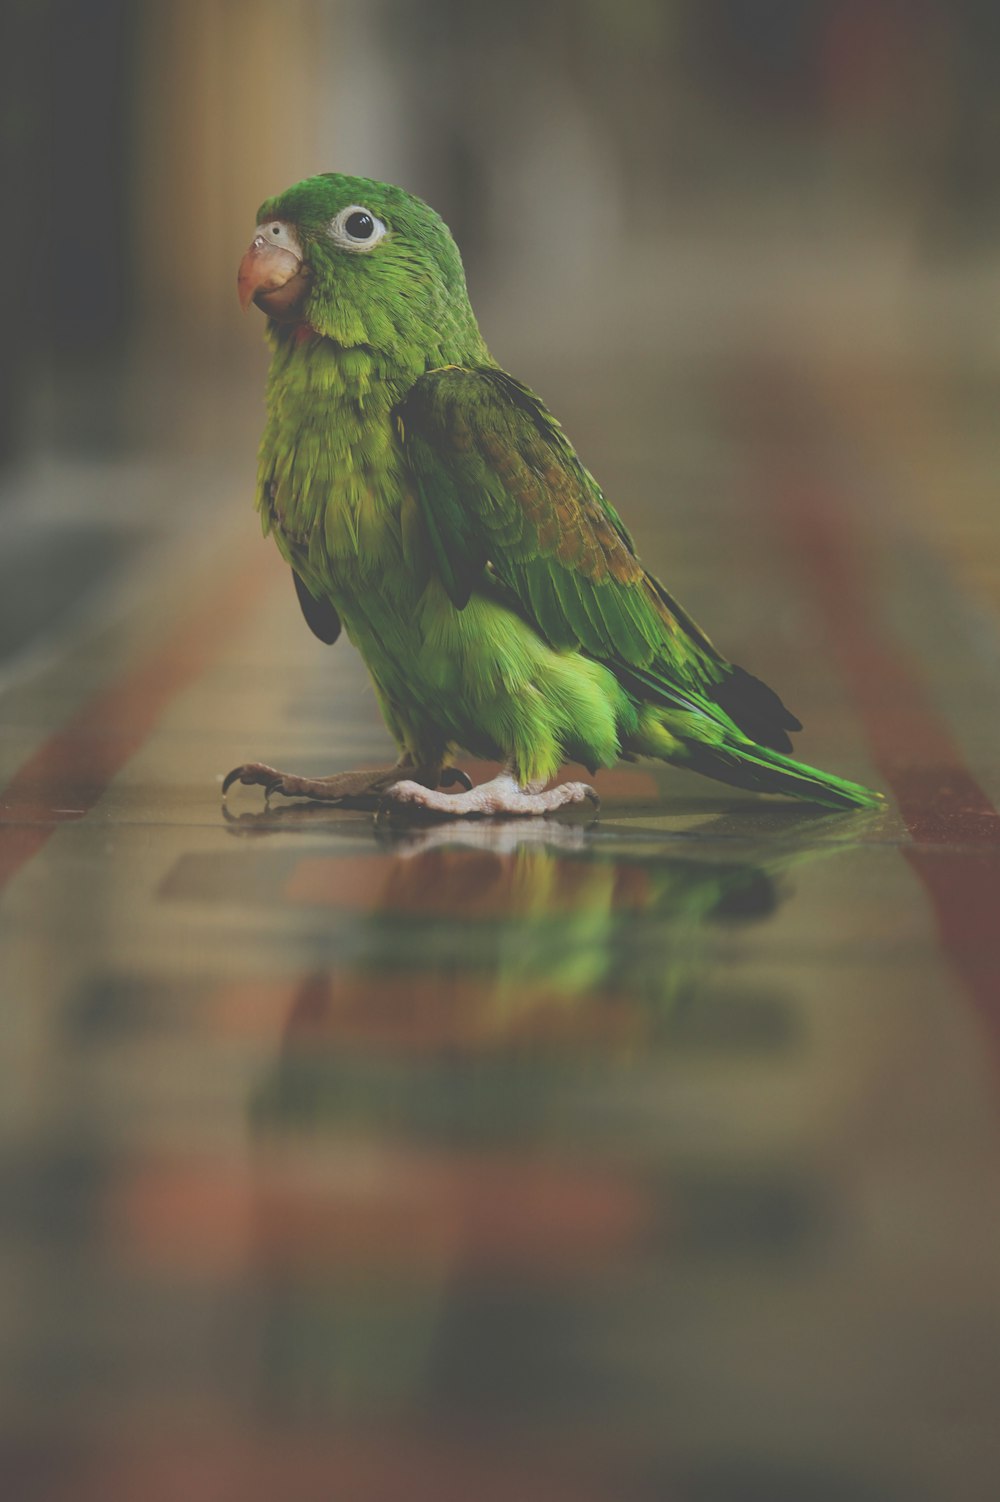 green bird standing on brown surface